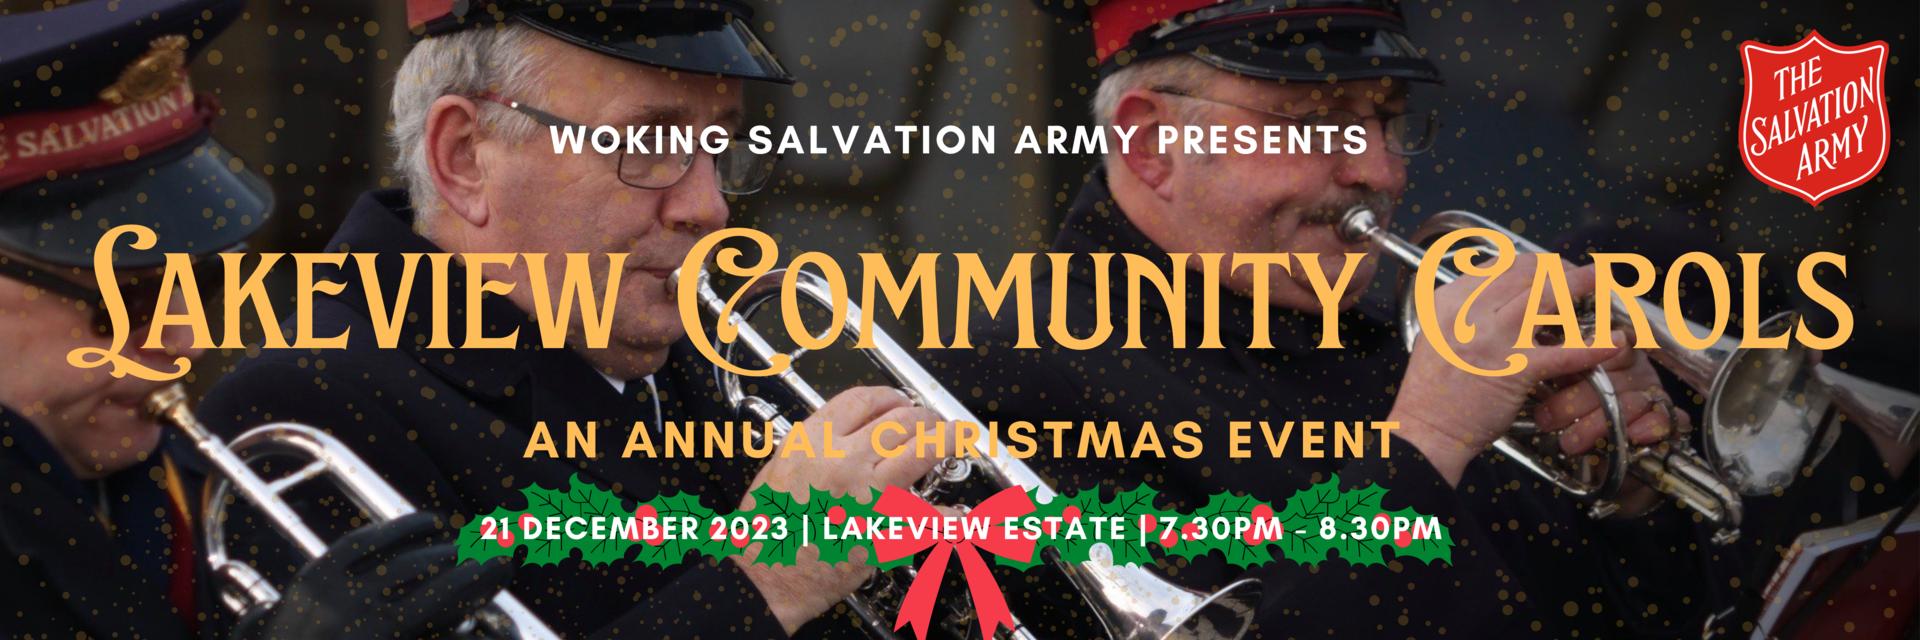 Lakeview Community Carols advert